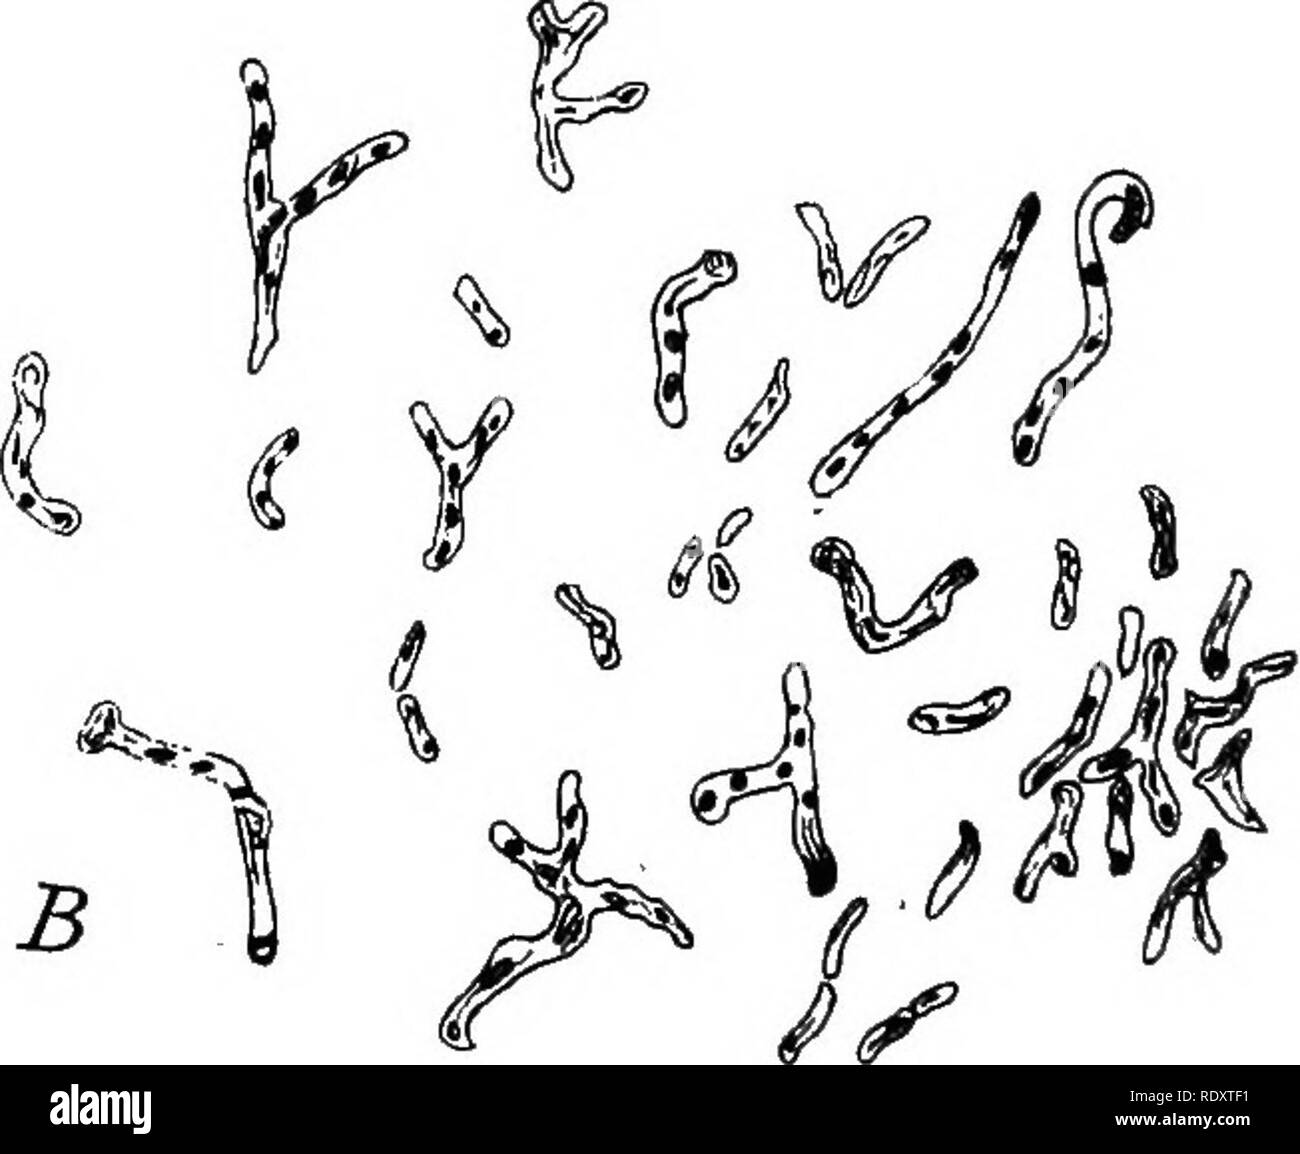 . Plant physiology. Plant physiology. Pig. 48.—A. Leaves of Favetta indica, showing nodules, which contain nitrogen-fixing bacteria. B. Cells of Mycobacterium rubiacearum from leaf nodules of Pavetta zimmermanniana. Magnified to 3000 diameters. (,After Faber.) 1 Winogradsky, S.» Sur I'assimilation de I'azote gazeux de ratmosphere par les microbes. Compt. rend. Paris 116: 138S-1388. 1893. Idem, same title. JWd. 118: 3S3-3SS. 1894. 2 Beijerinck, M. W., Ueber oligonitrophile Mikroben. Centralbl. Bakt. II, 7: 561-582. 1901. Freund- enreich, Ed. von, Ueber stiokstofifbindende Bakterien. /Md. 77, 10 Stock Photo